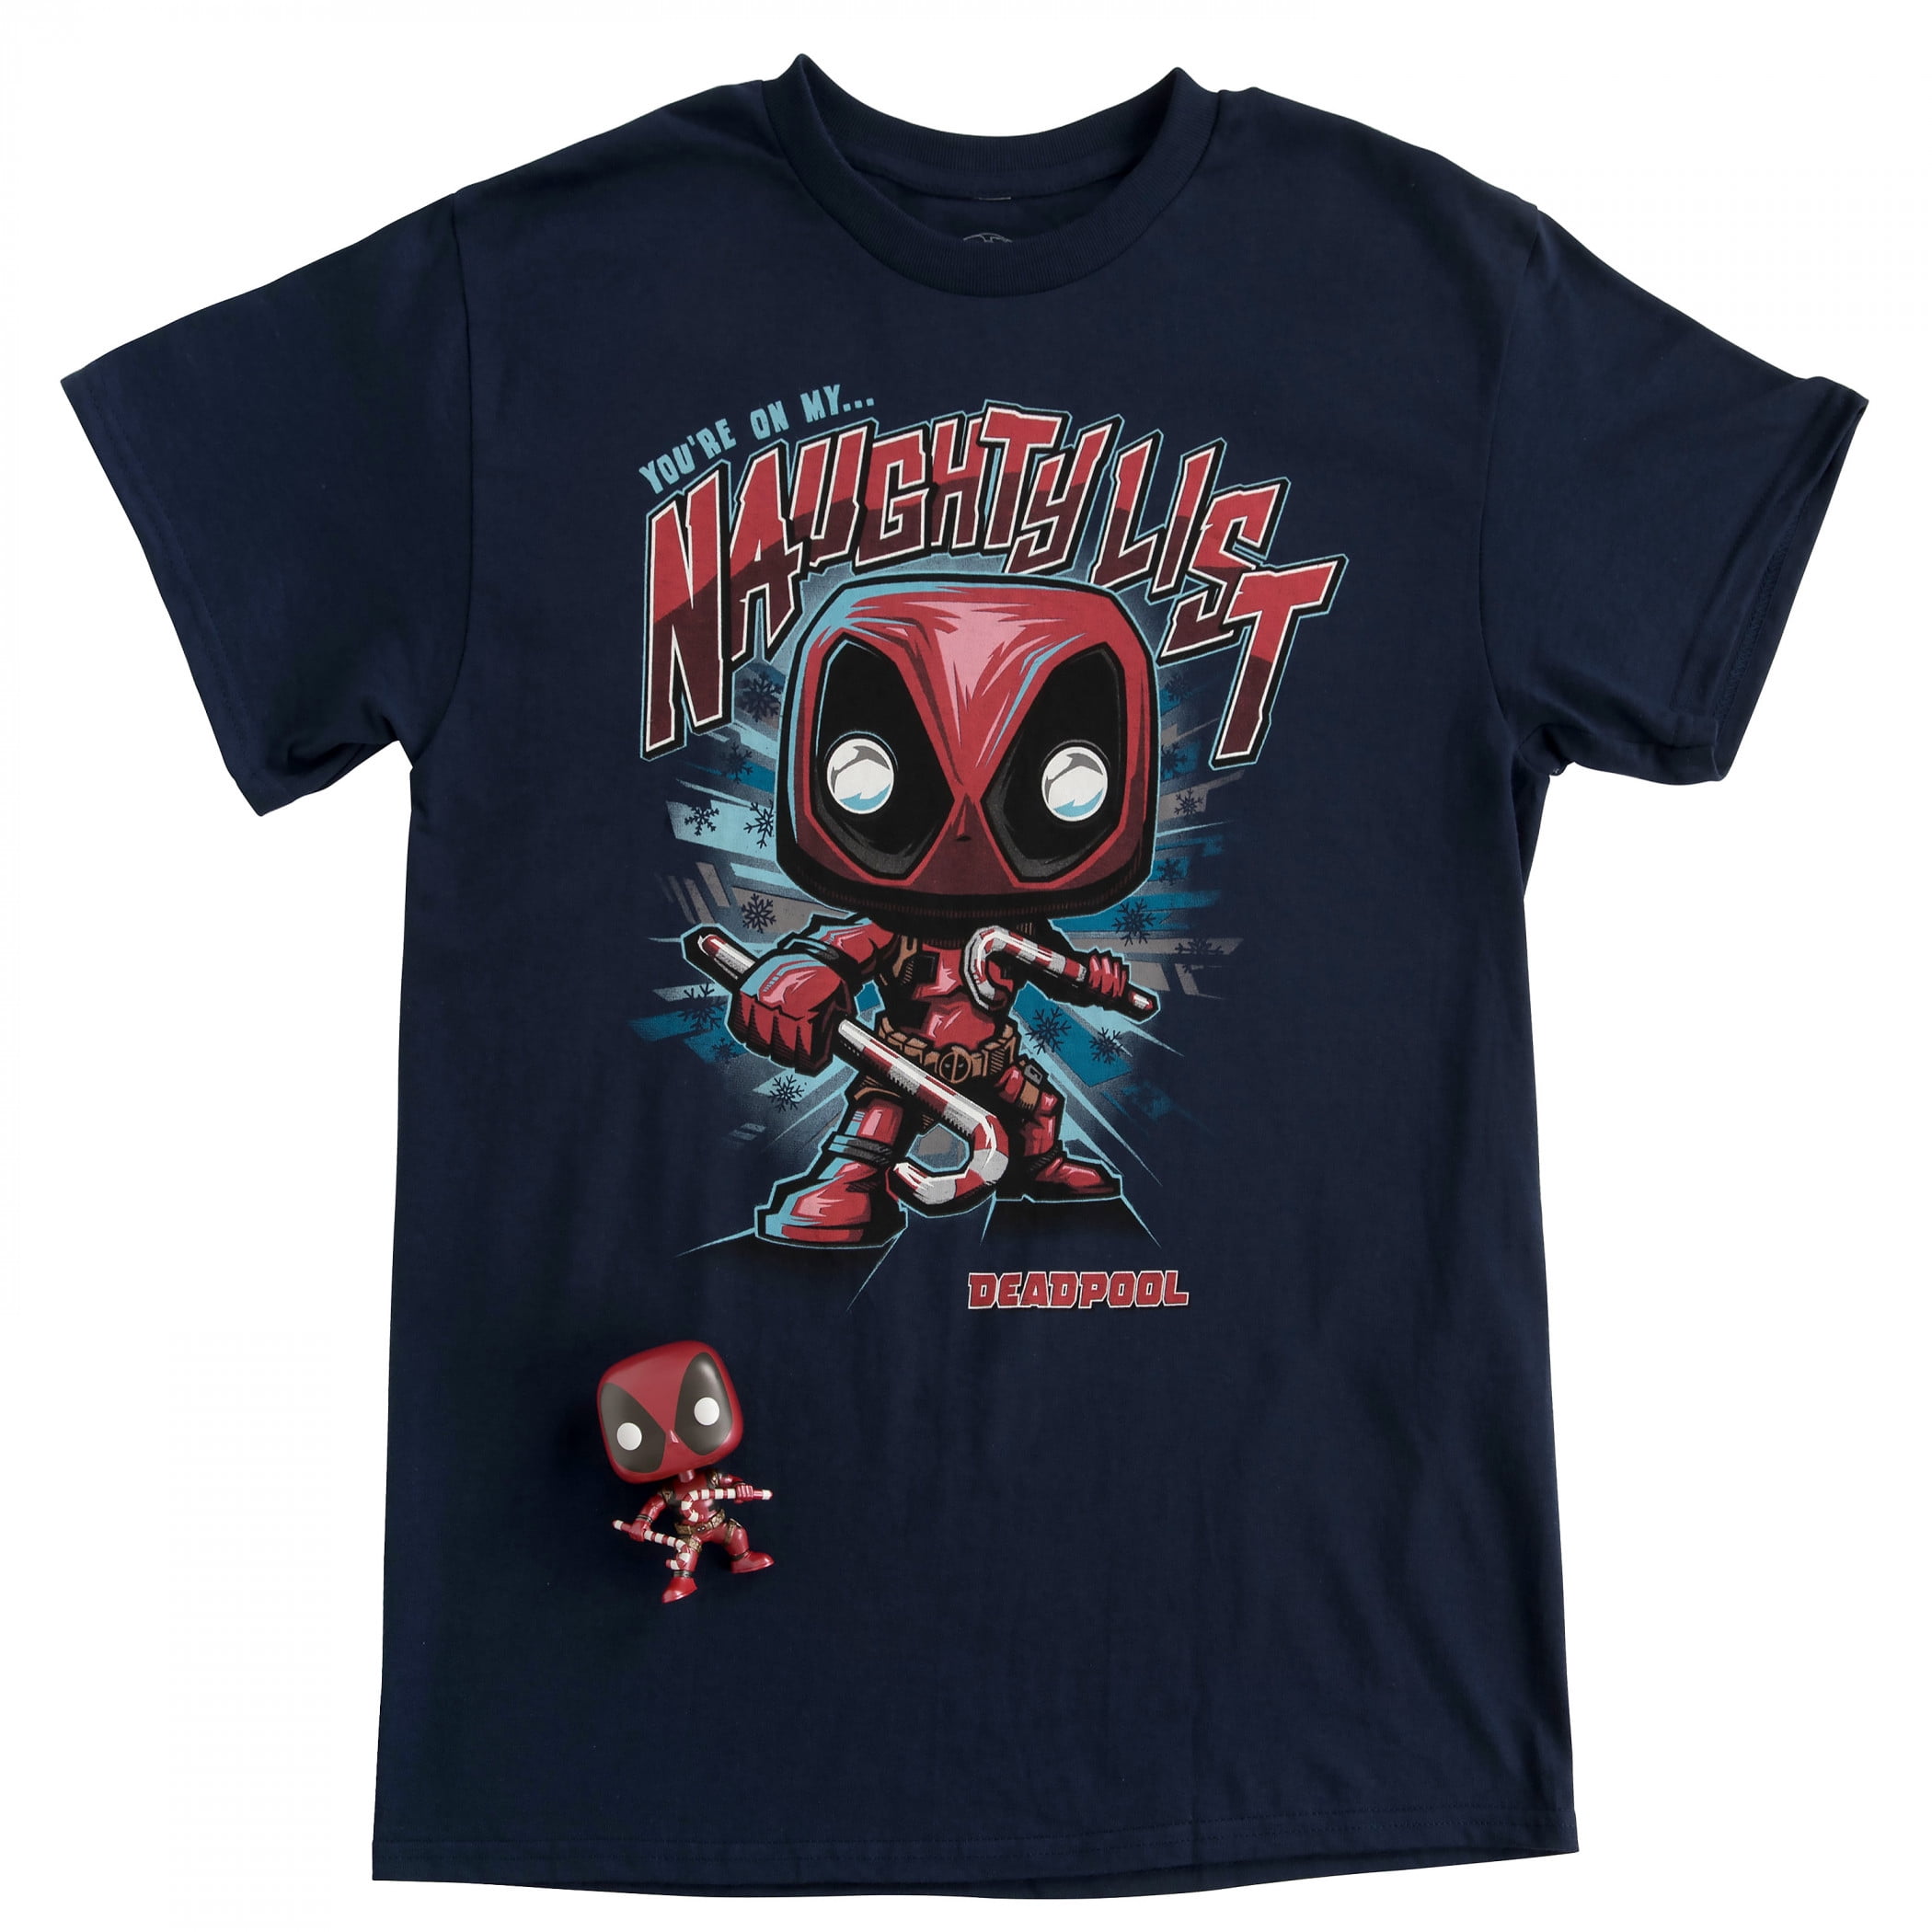 Deadpool Christmas T-Shirt mit Funko Pop Figur